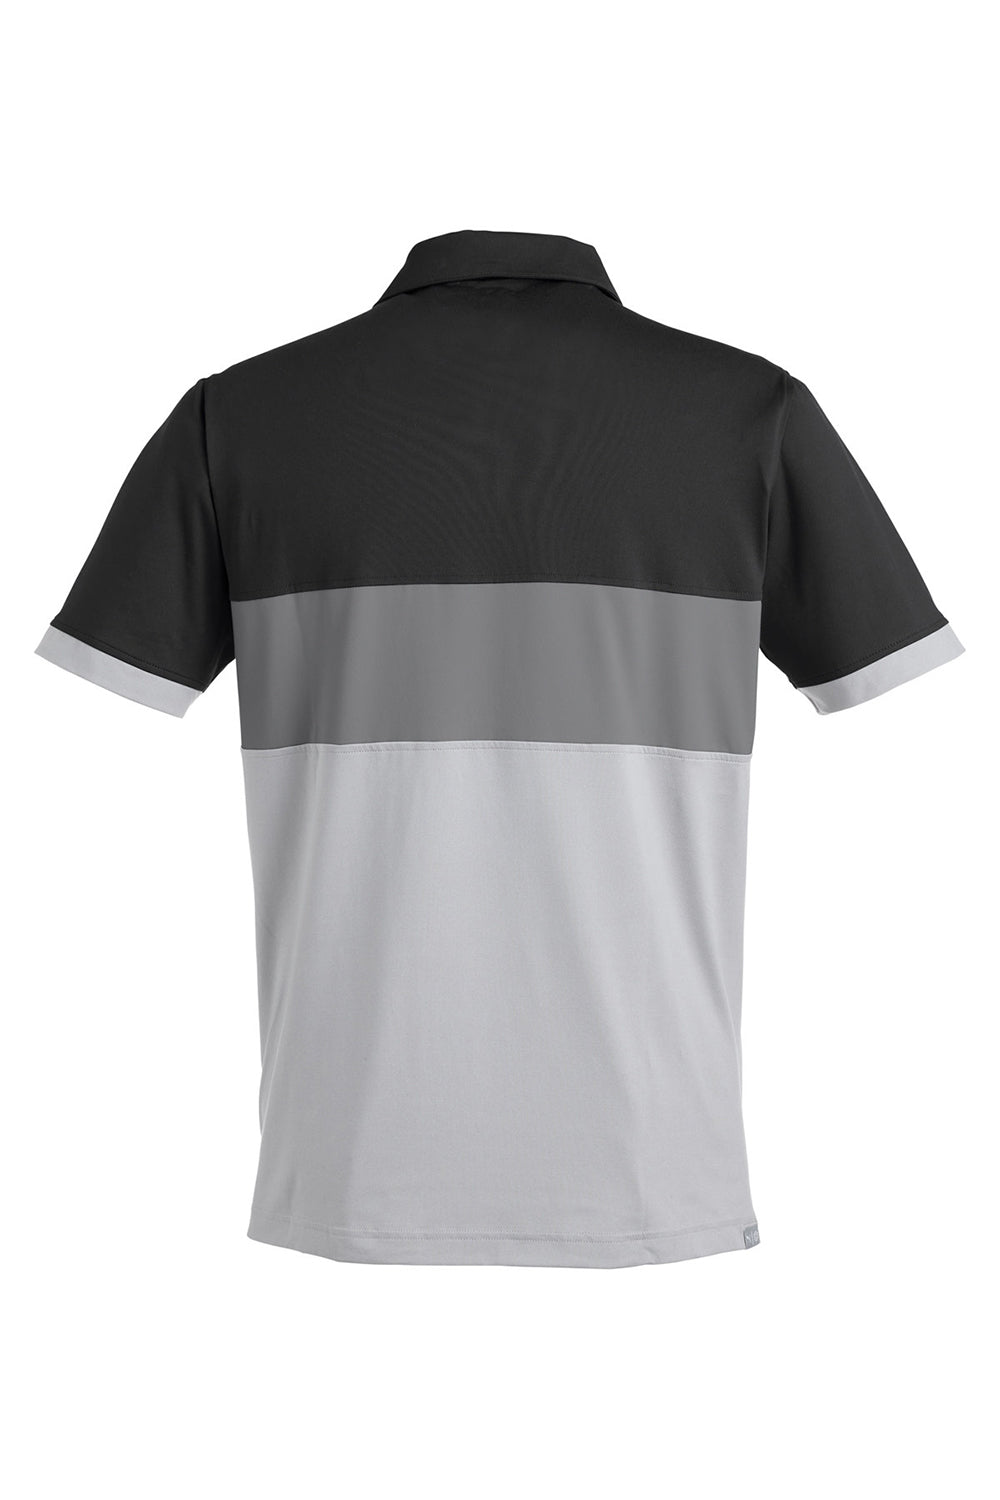 Puma 538930 Mens Cloudspun Highway Short Sleeve Polo Shirt Black Flat Back